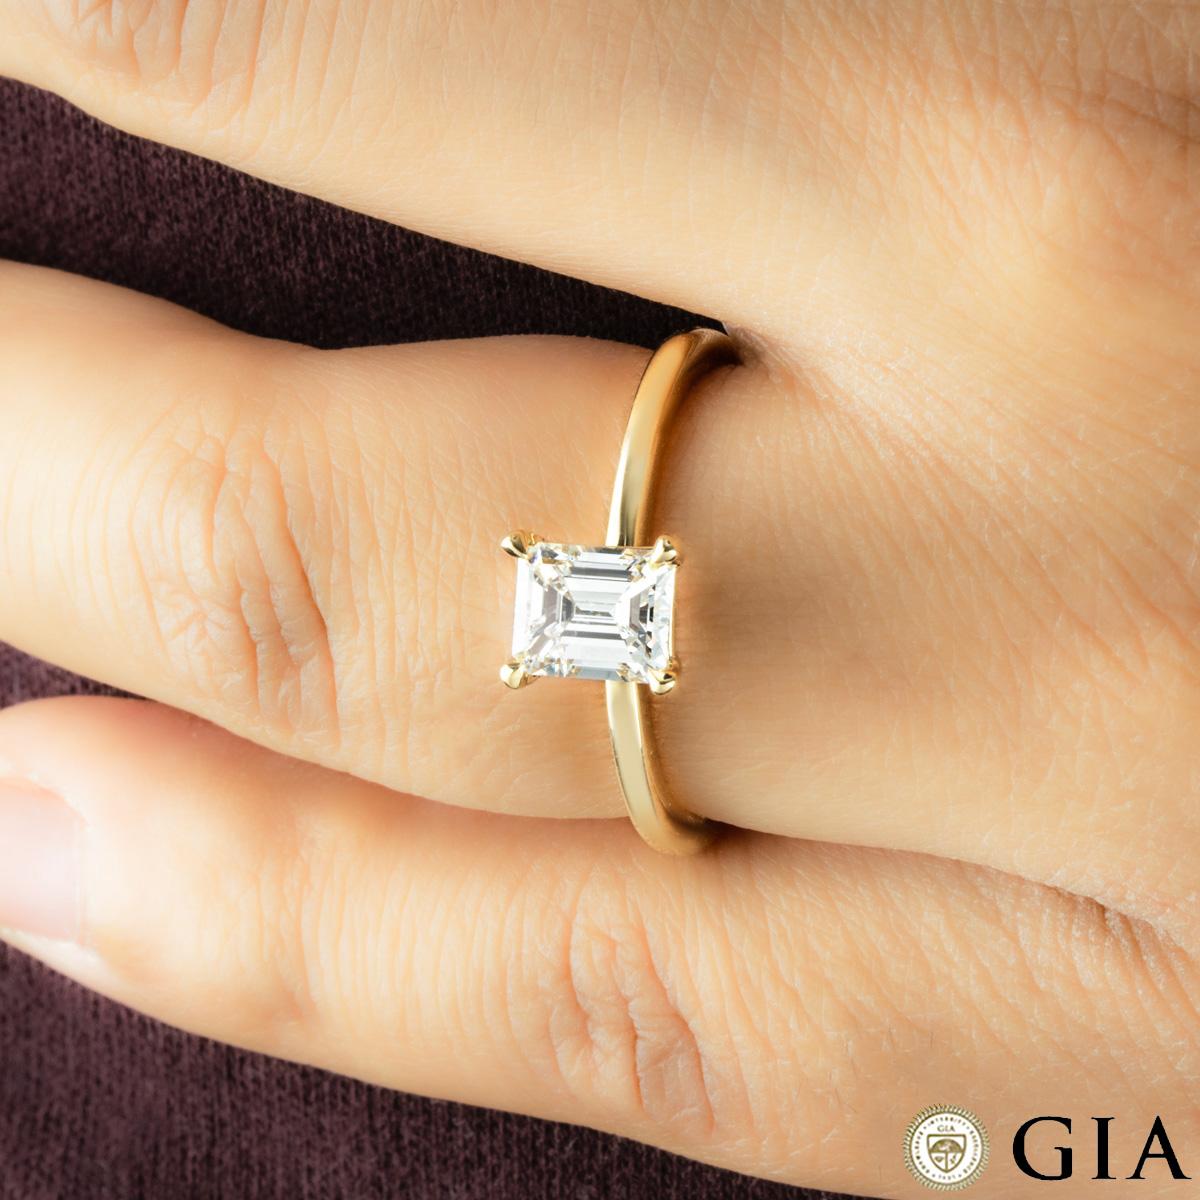 GIA Certified Yellow Gold Emerald Cut Diamond Ring 0.83 Carat E/VS1 For Sale 2